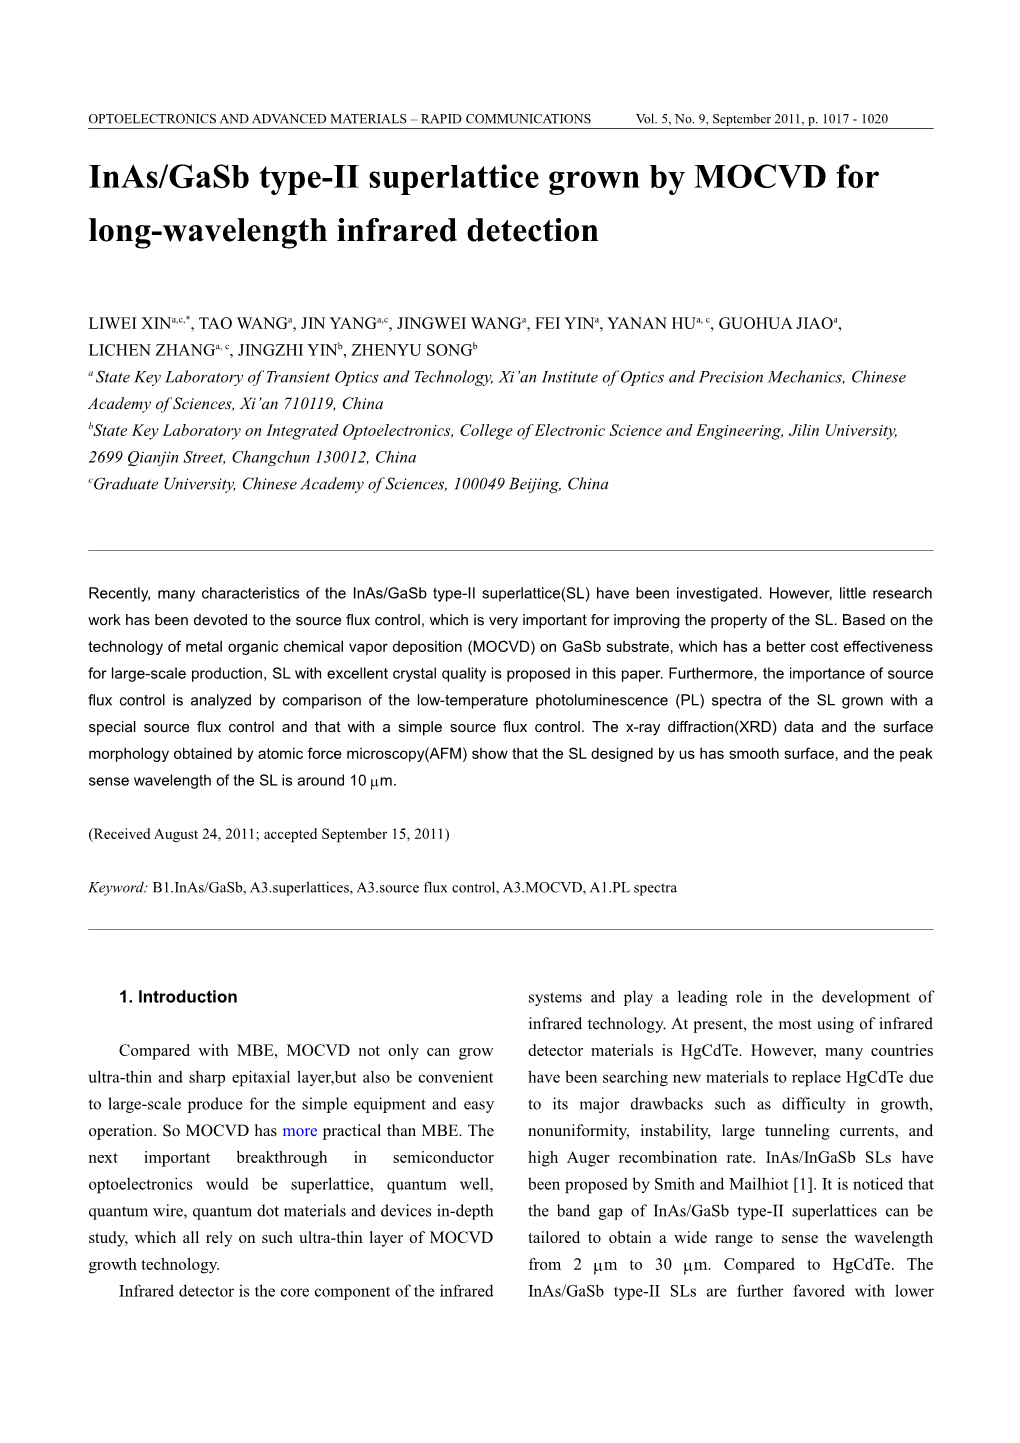 Nas/Gasb Type-II Superlattices for Long-Wavelength Infrared Detectors